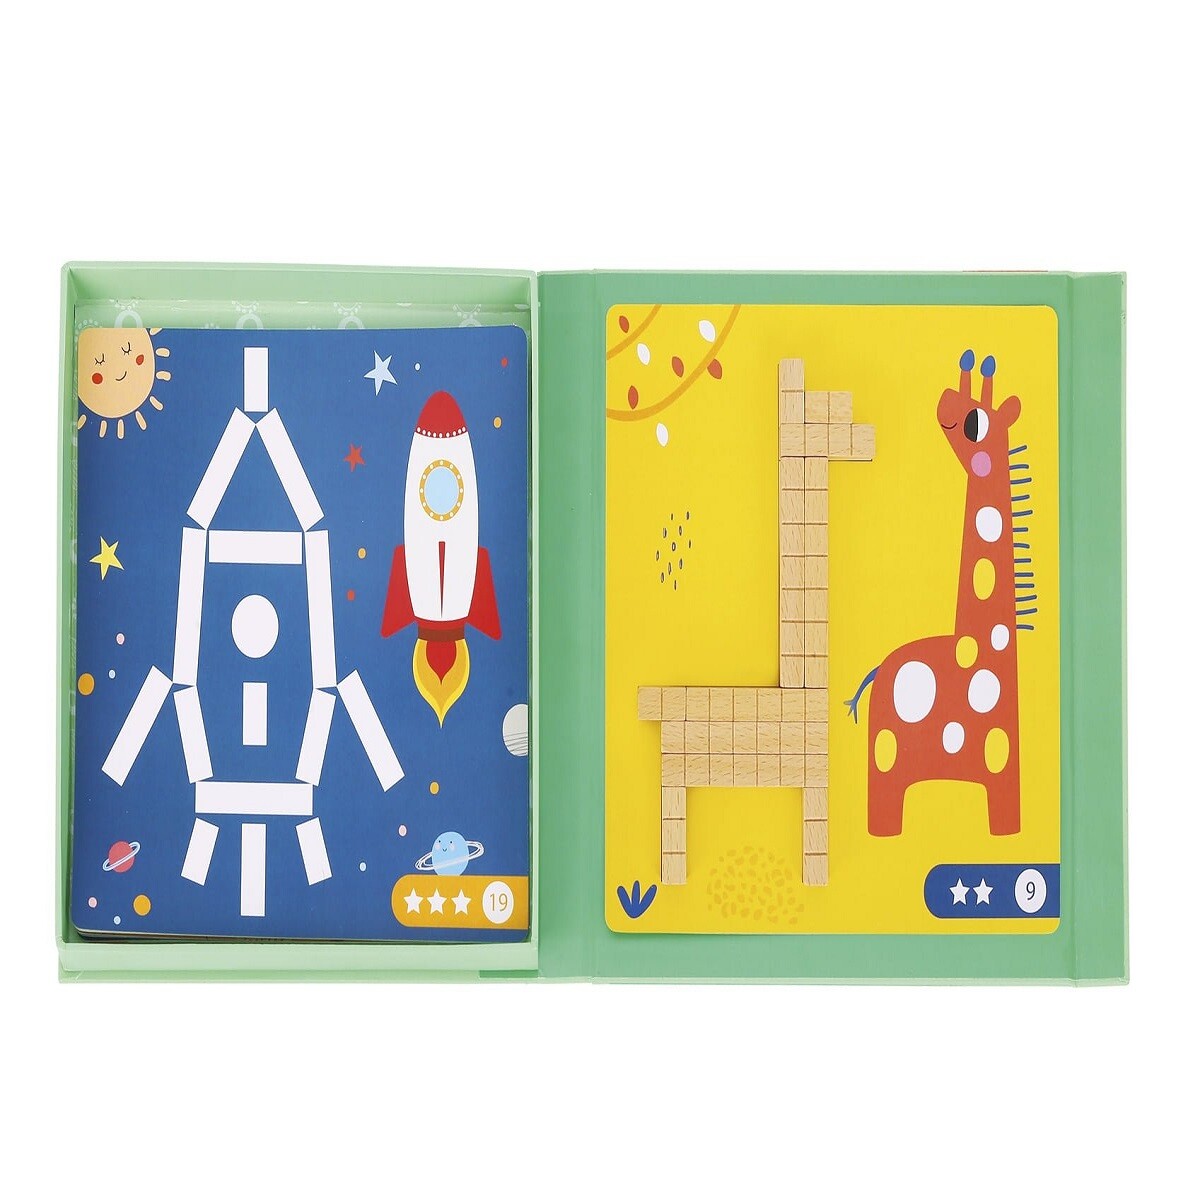 Creative math stick, juego de matematica Tooky Toy 